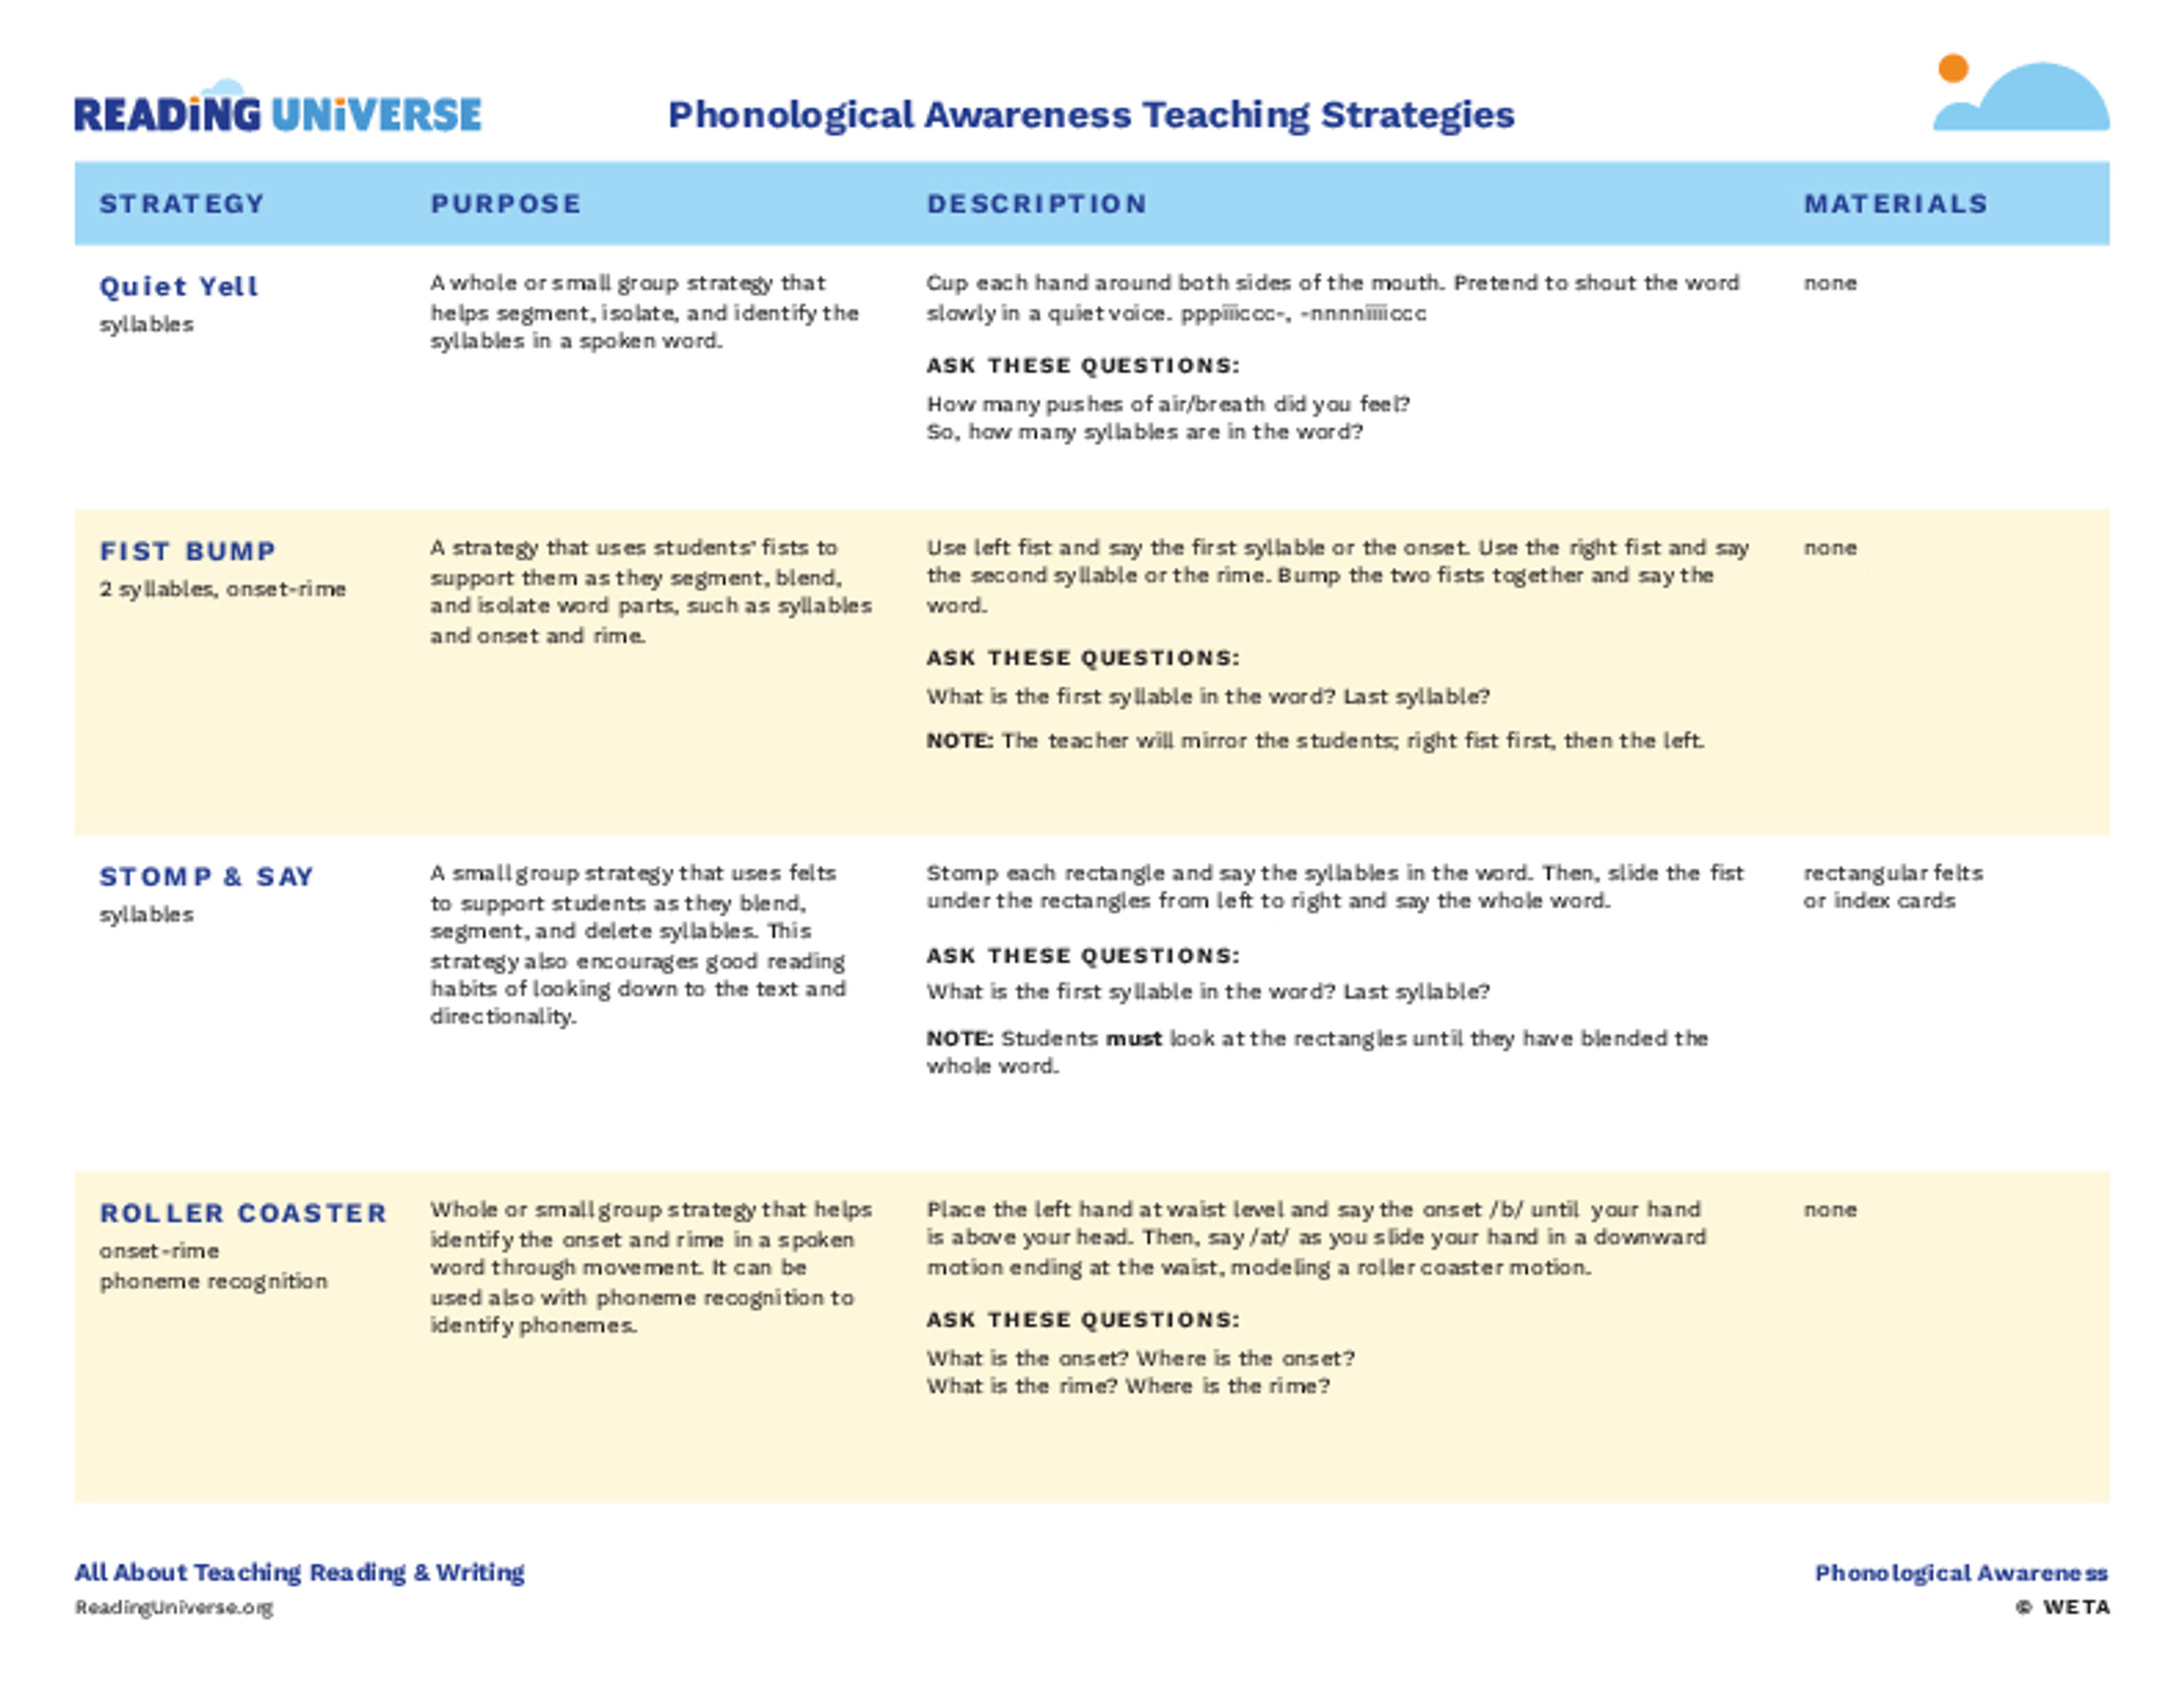 A breakdown of phonological awareness teaching strategies